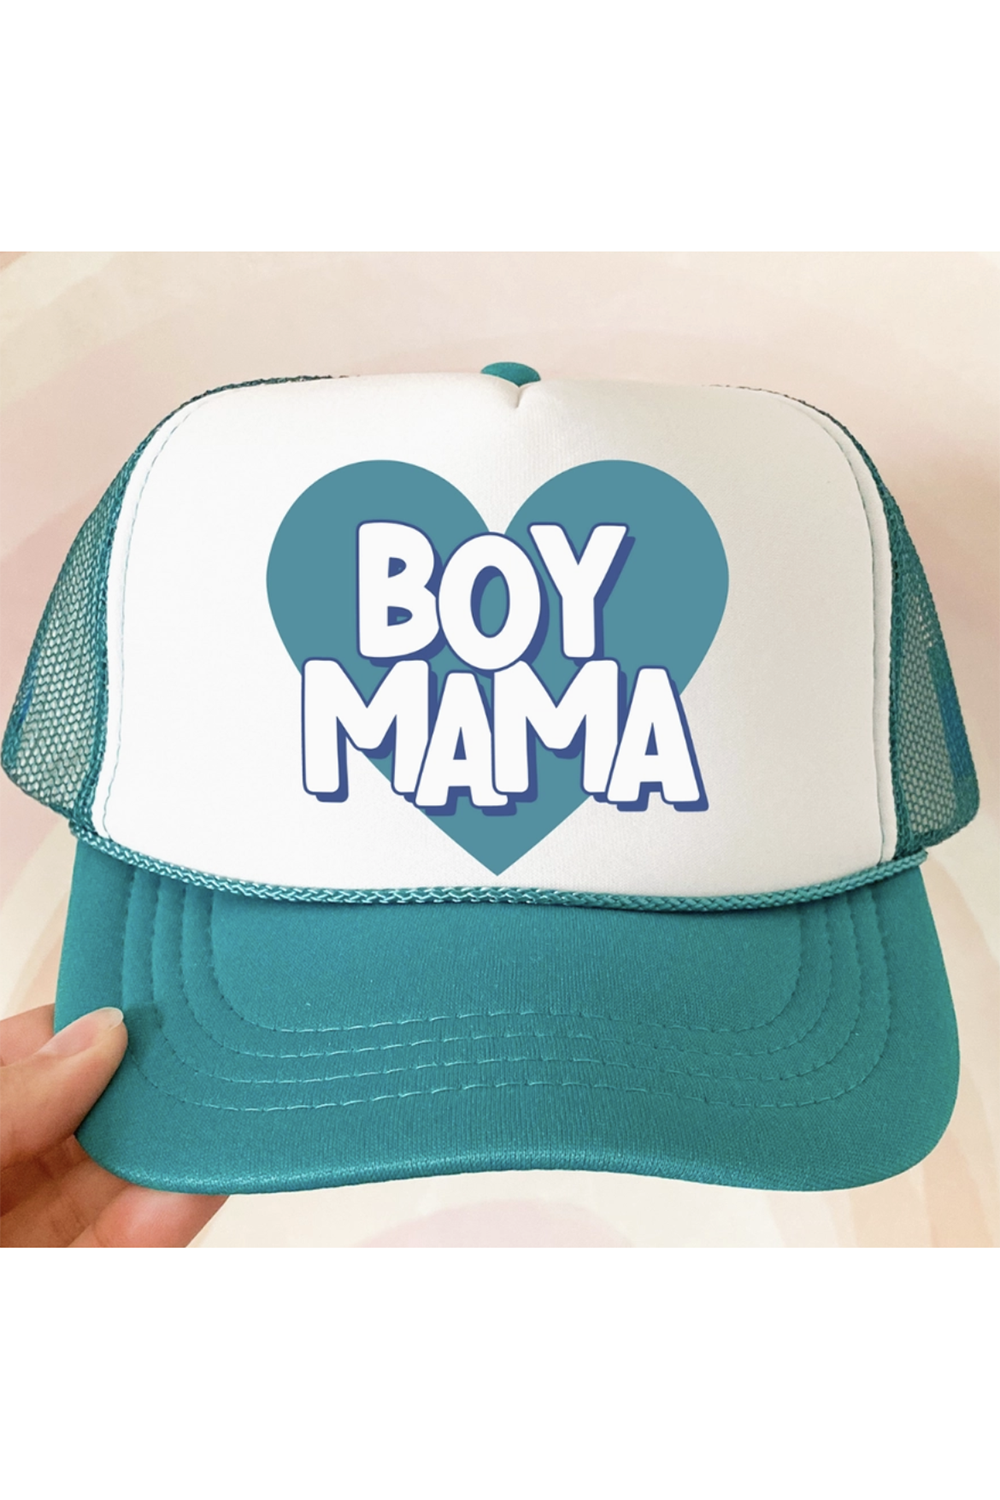 Mama Trucker Hat - Boy